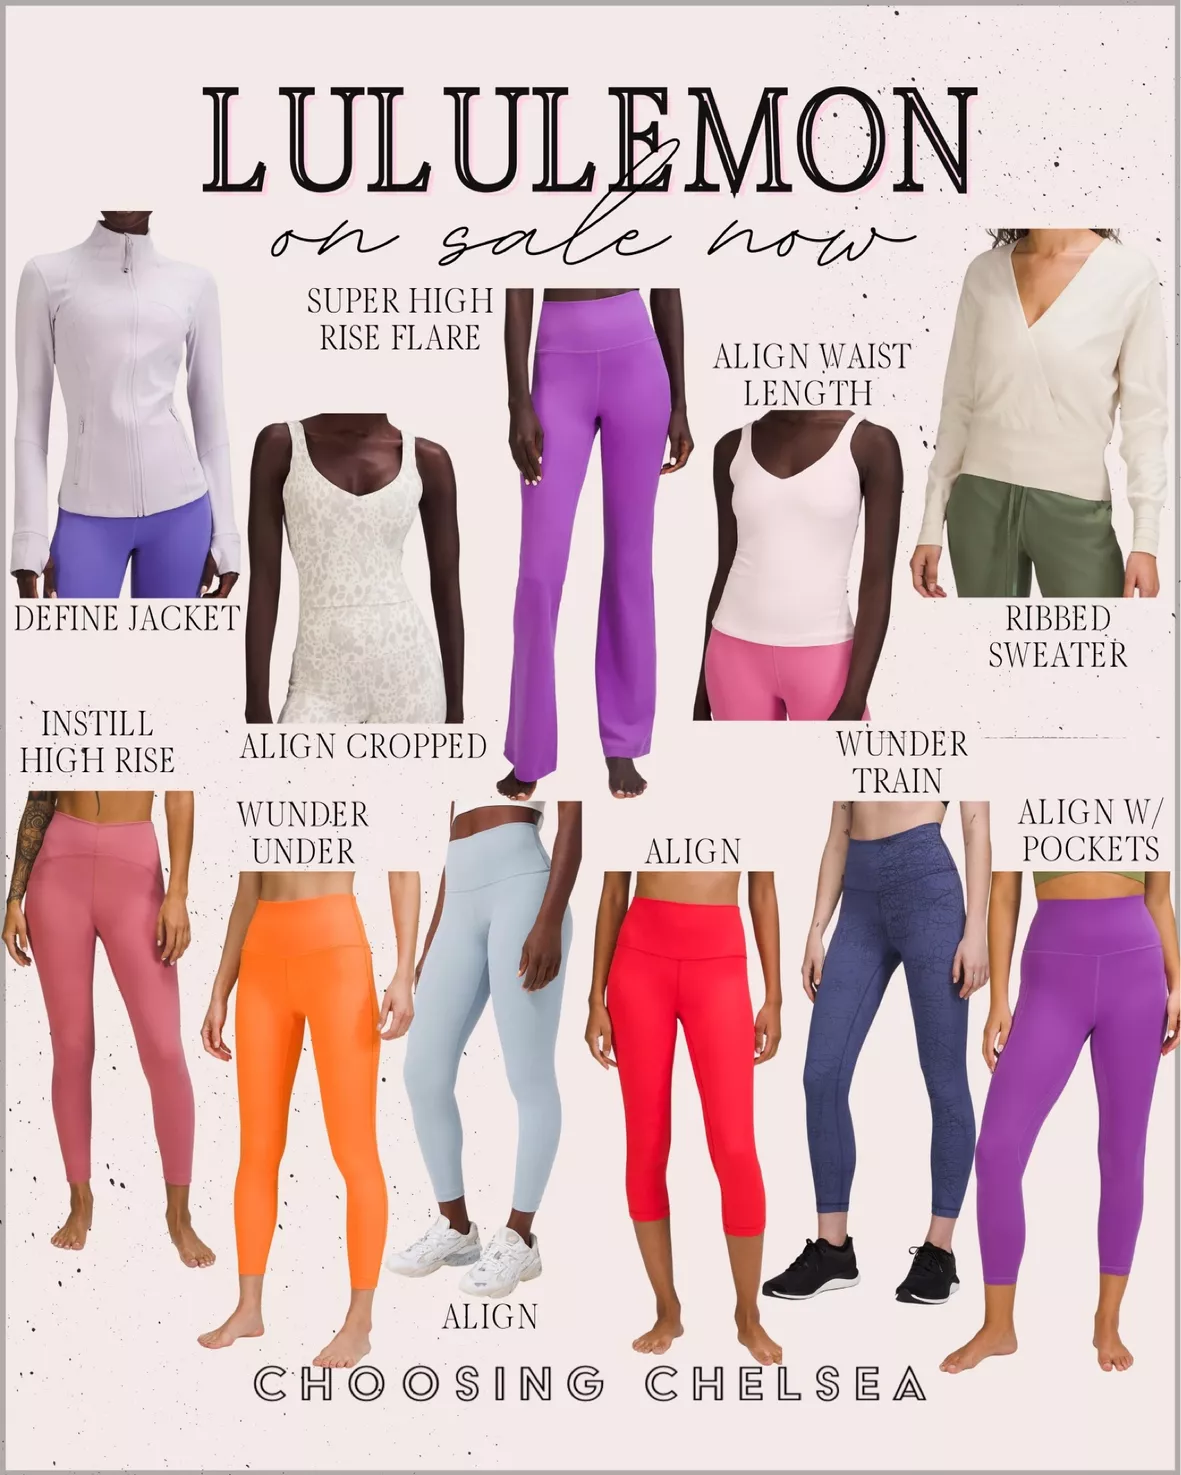 Lululemon crop 21 align leggings size 4  Leggings are not pants,  Lululemon crops, Lululemon